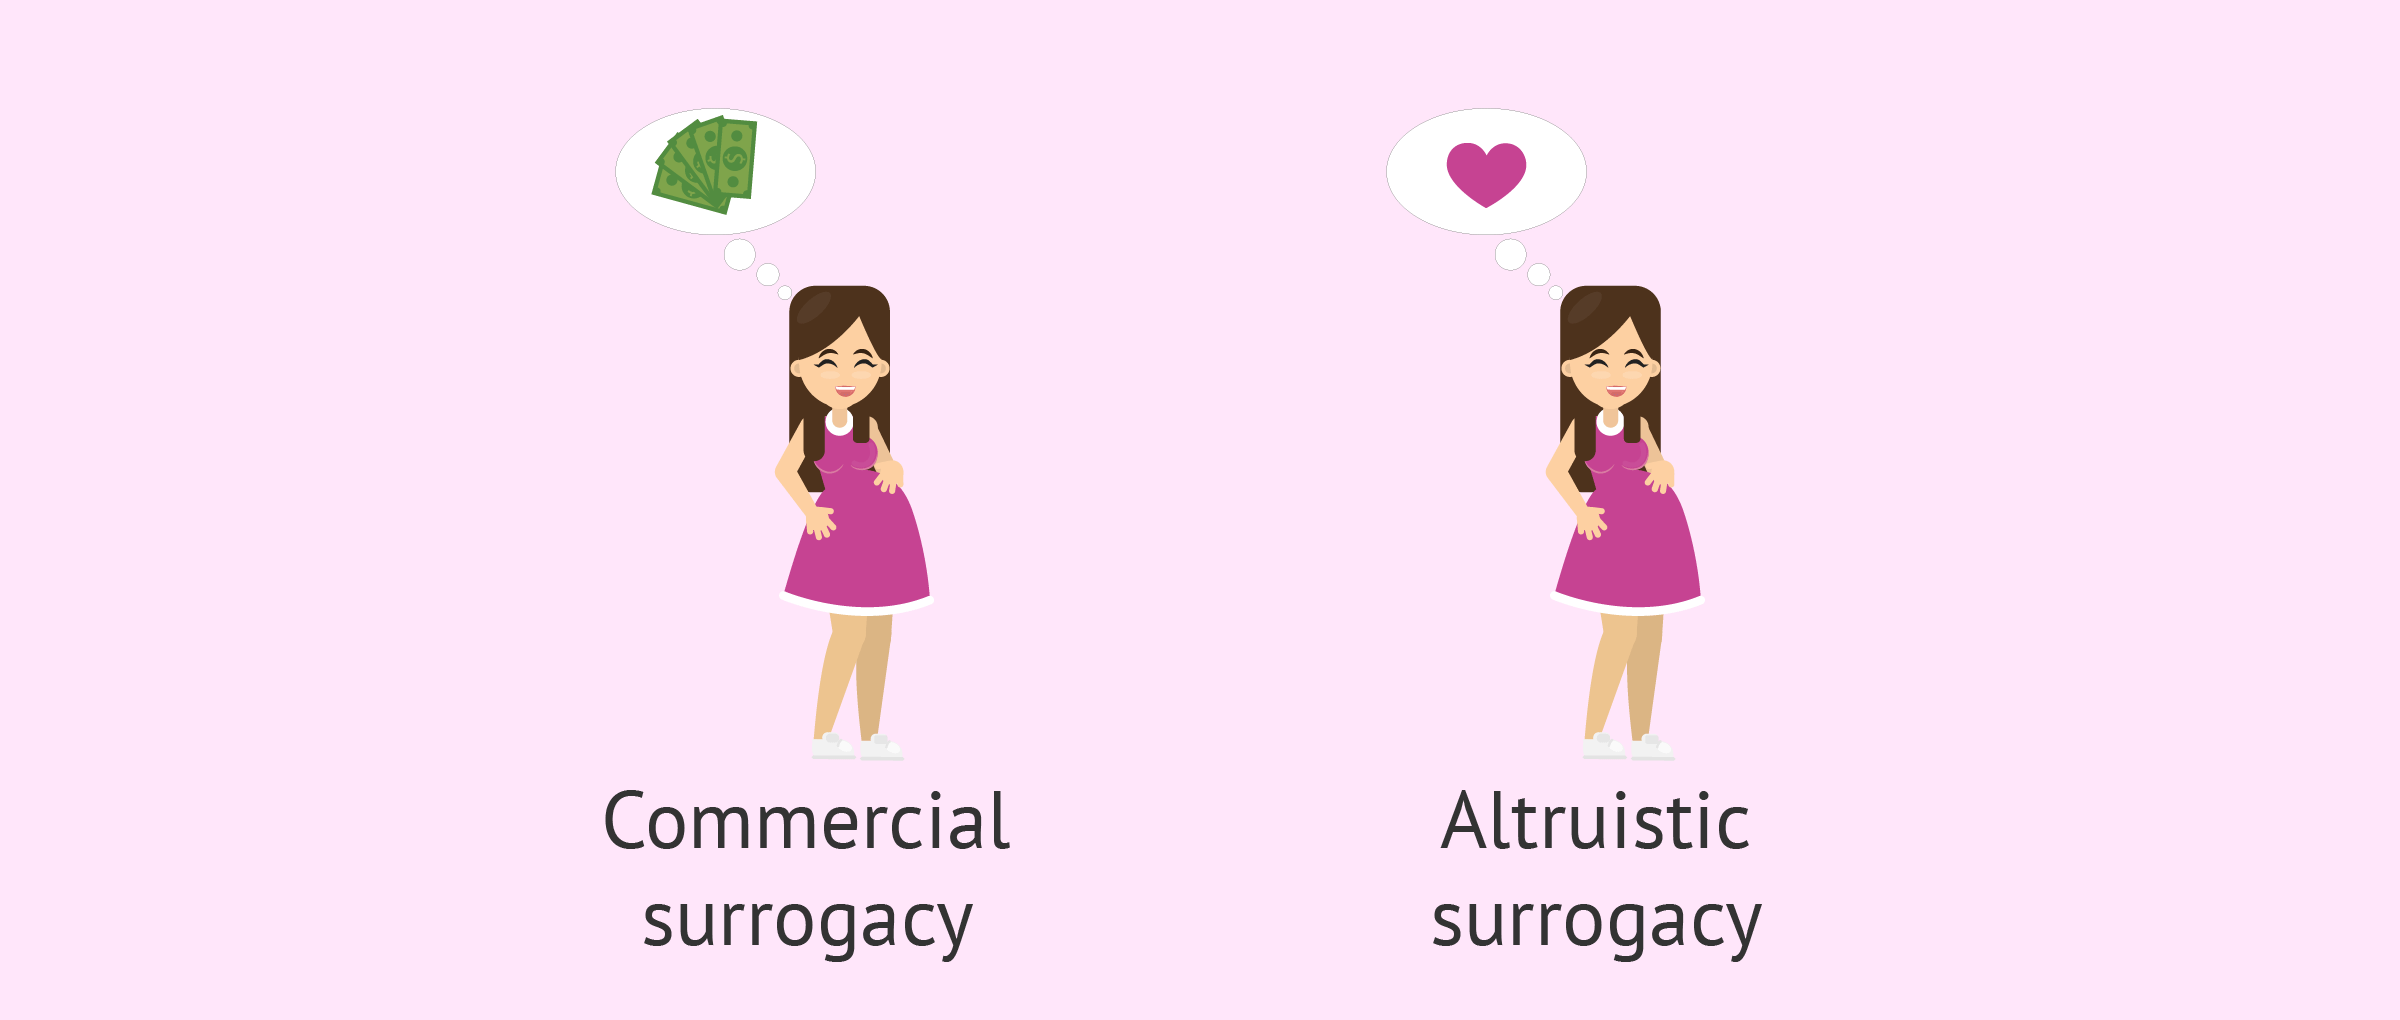 Altruistic vs. commercial surrogacy